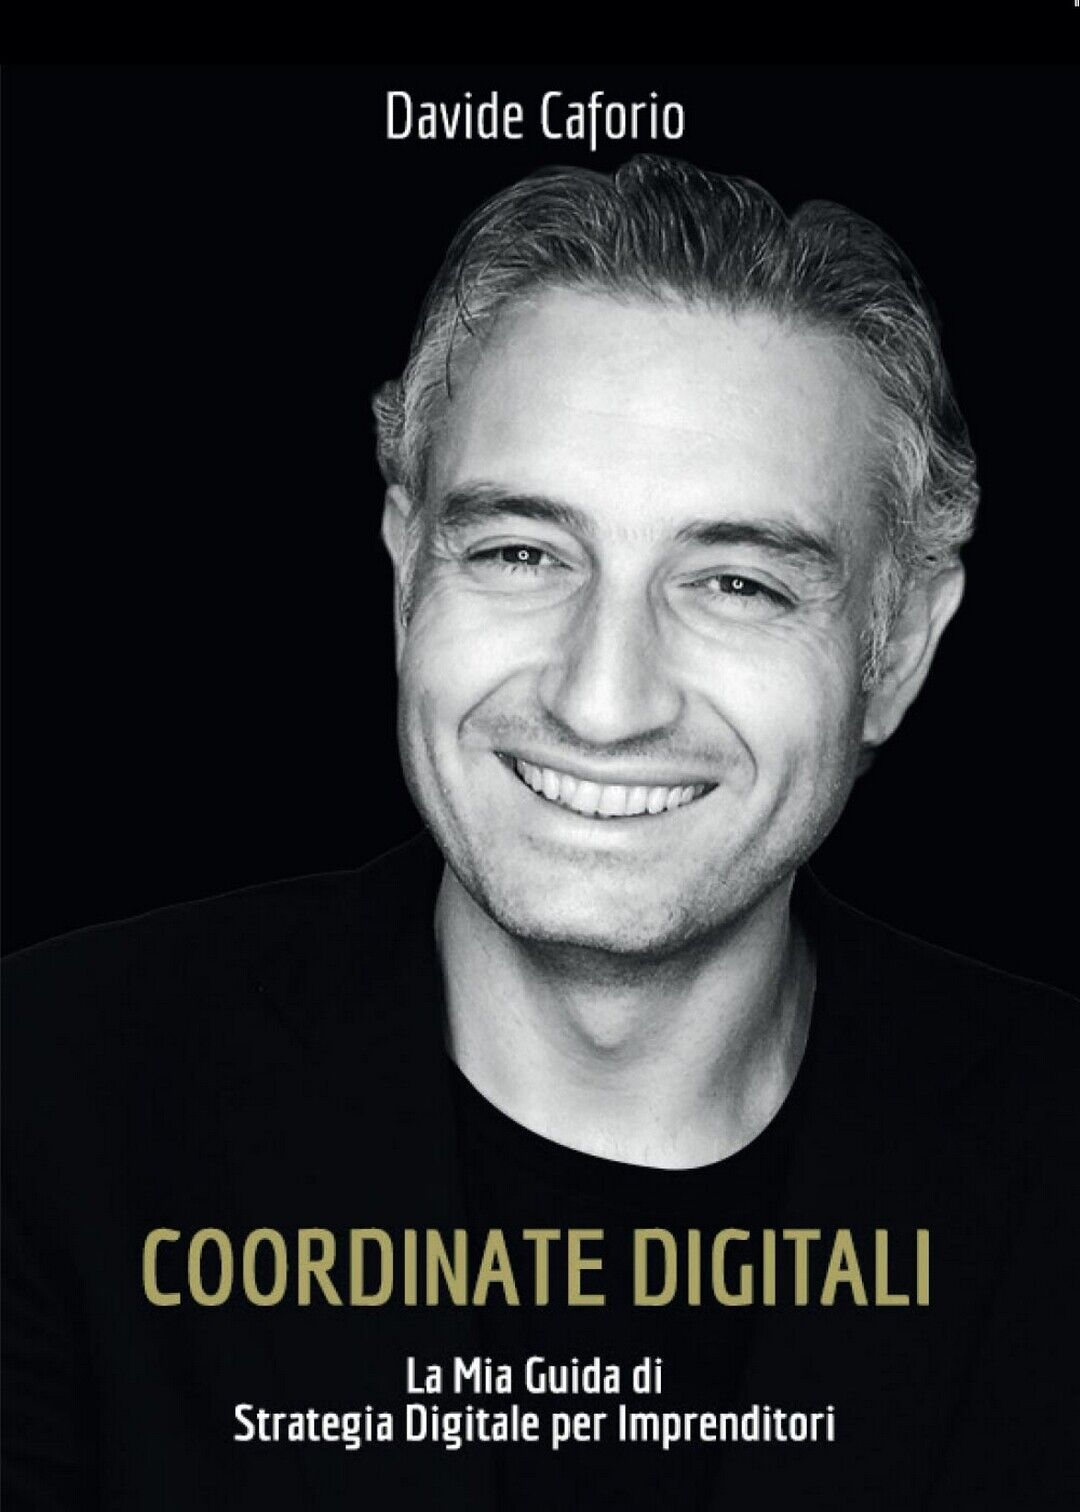 Coordinate Digitali: la Mia Guida di Strategia Digitale per Imprenditori 